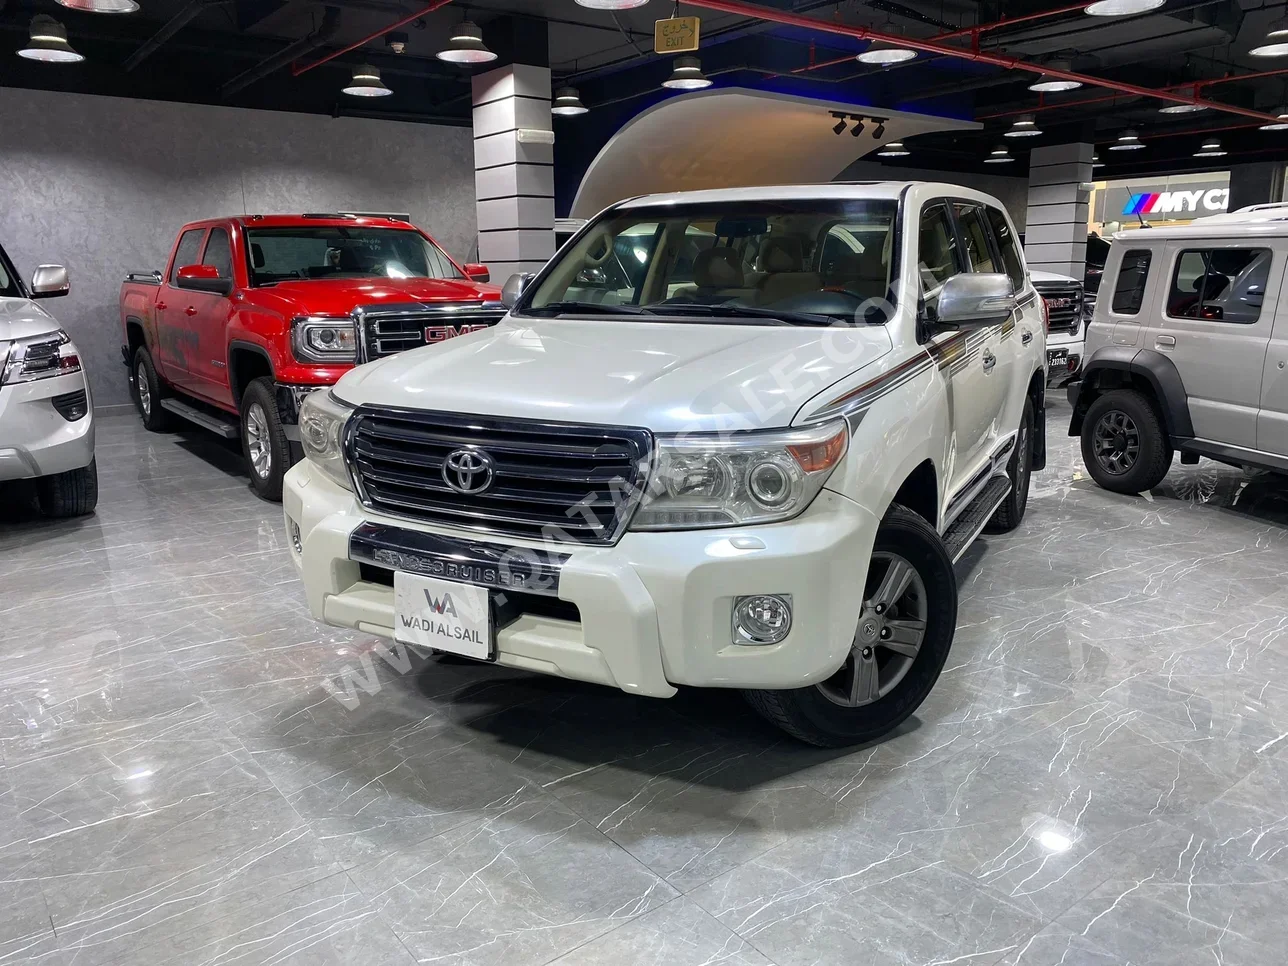 Toyota  Land Cruiser  GXR  2012  Automatic  375,000 Km  8 Cylinder  Four Wheel Drive (4WD)  SUV  White